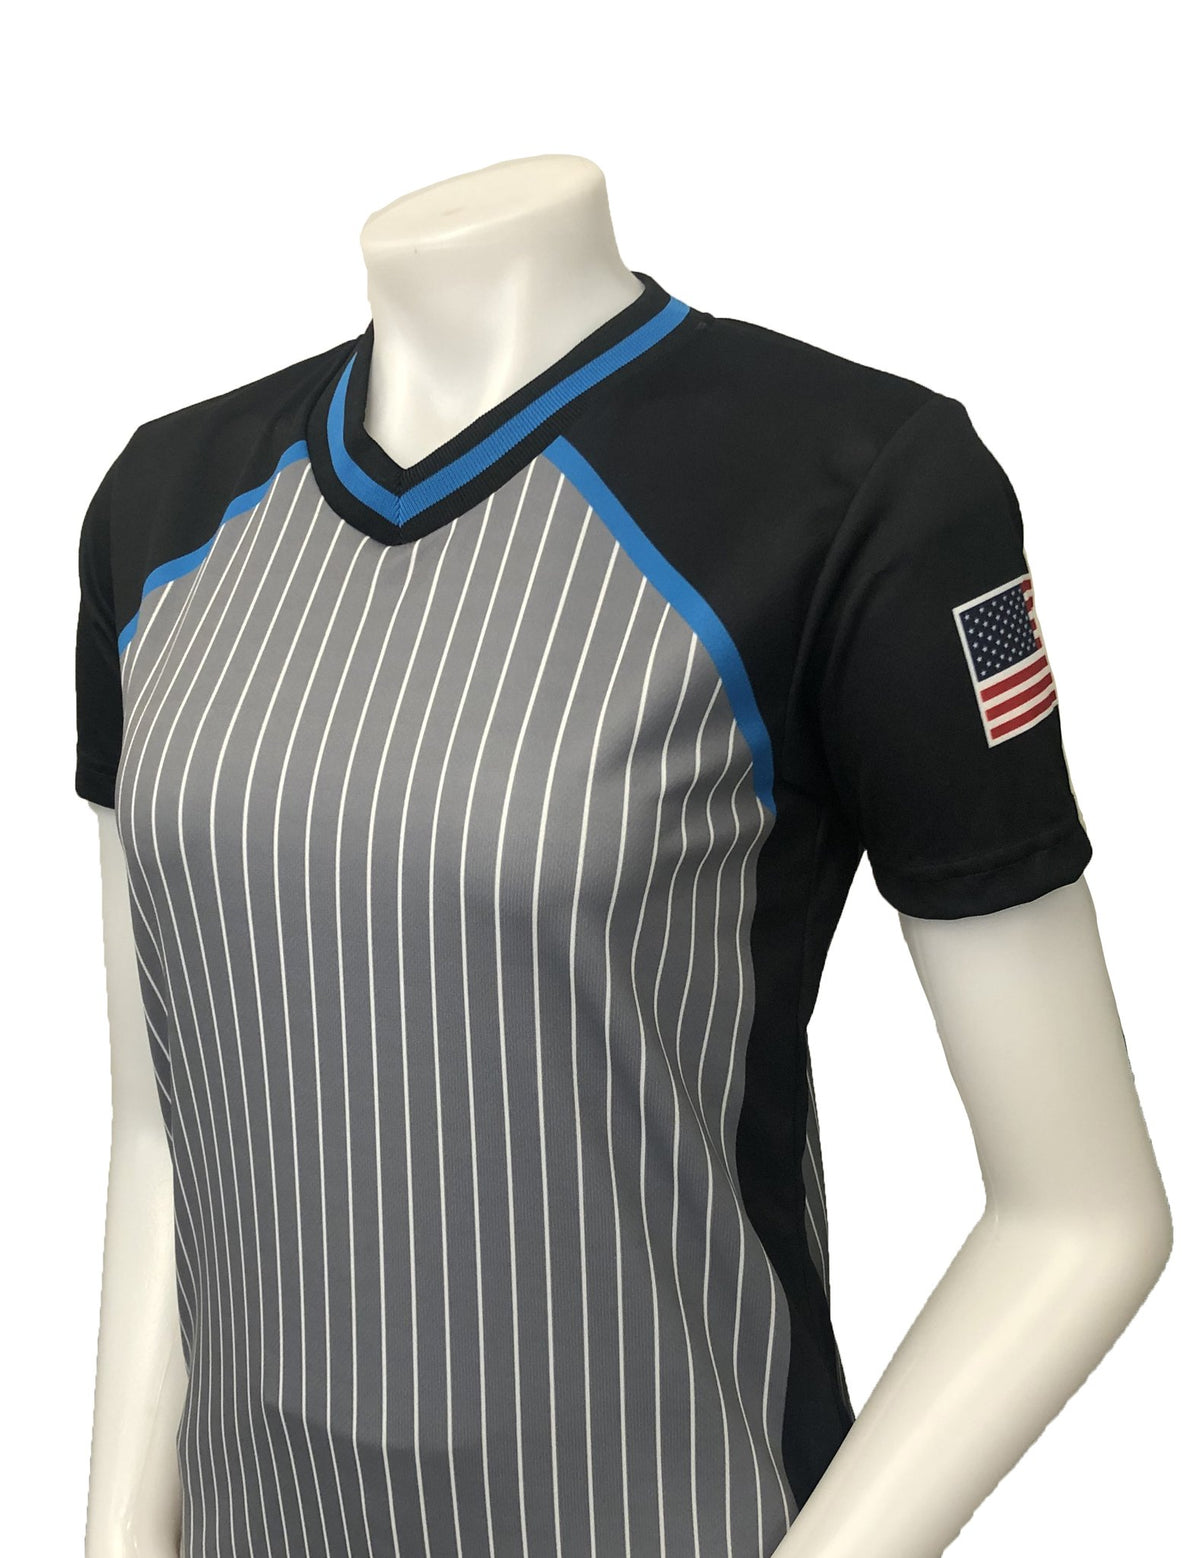 Smitty | USA-239-607 | Women's NCAA College Basketball Referee Shirt | Body Flex